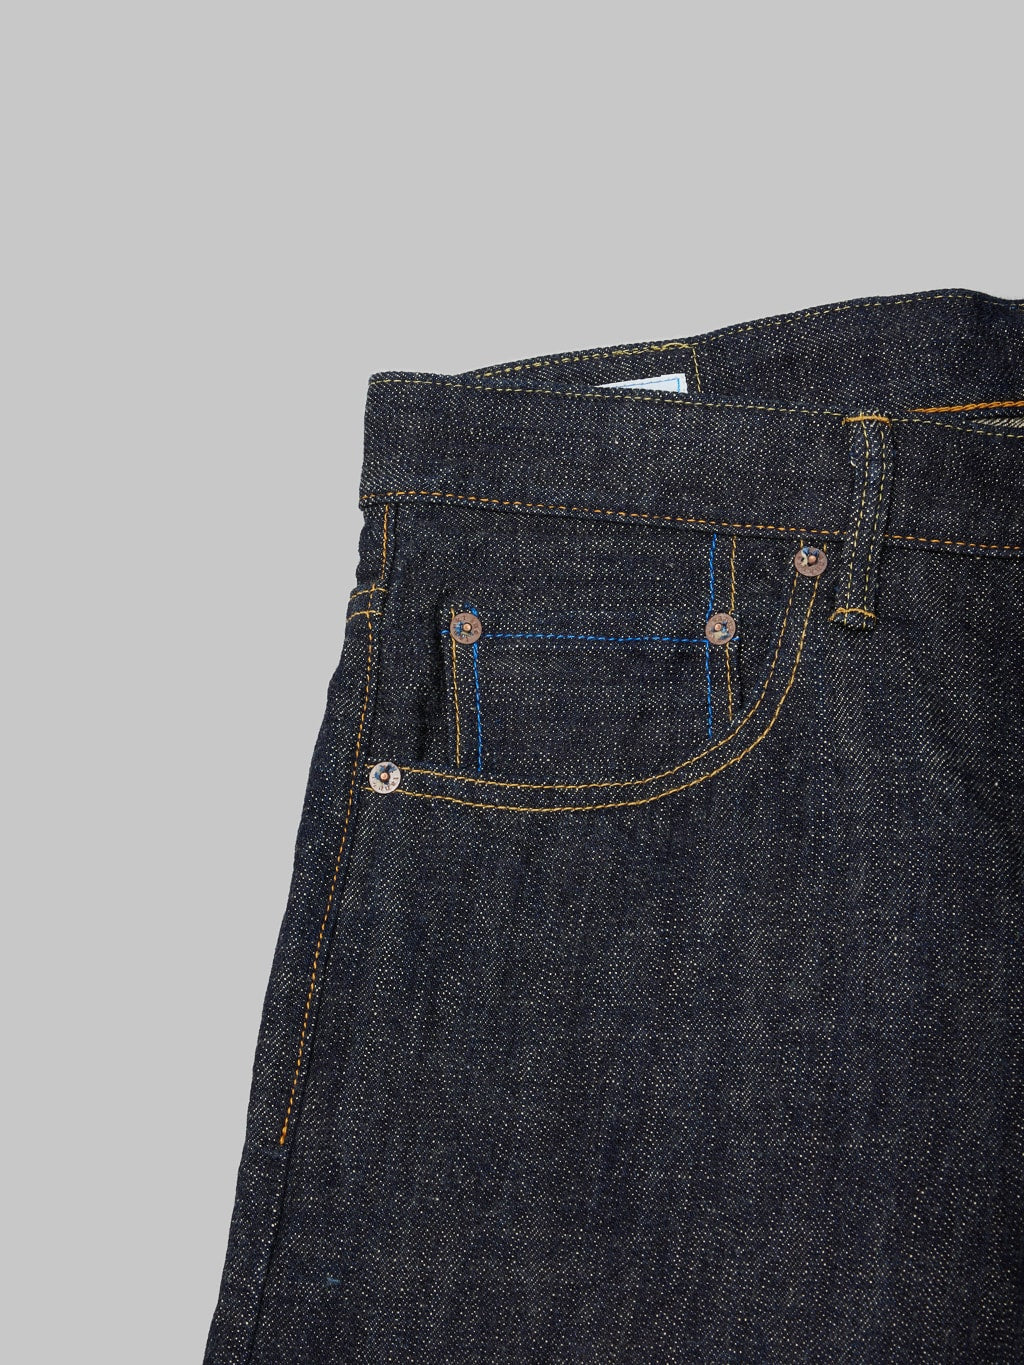 Tanuki Zetto Benkei High Tapered Jeans coin front pocket